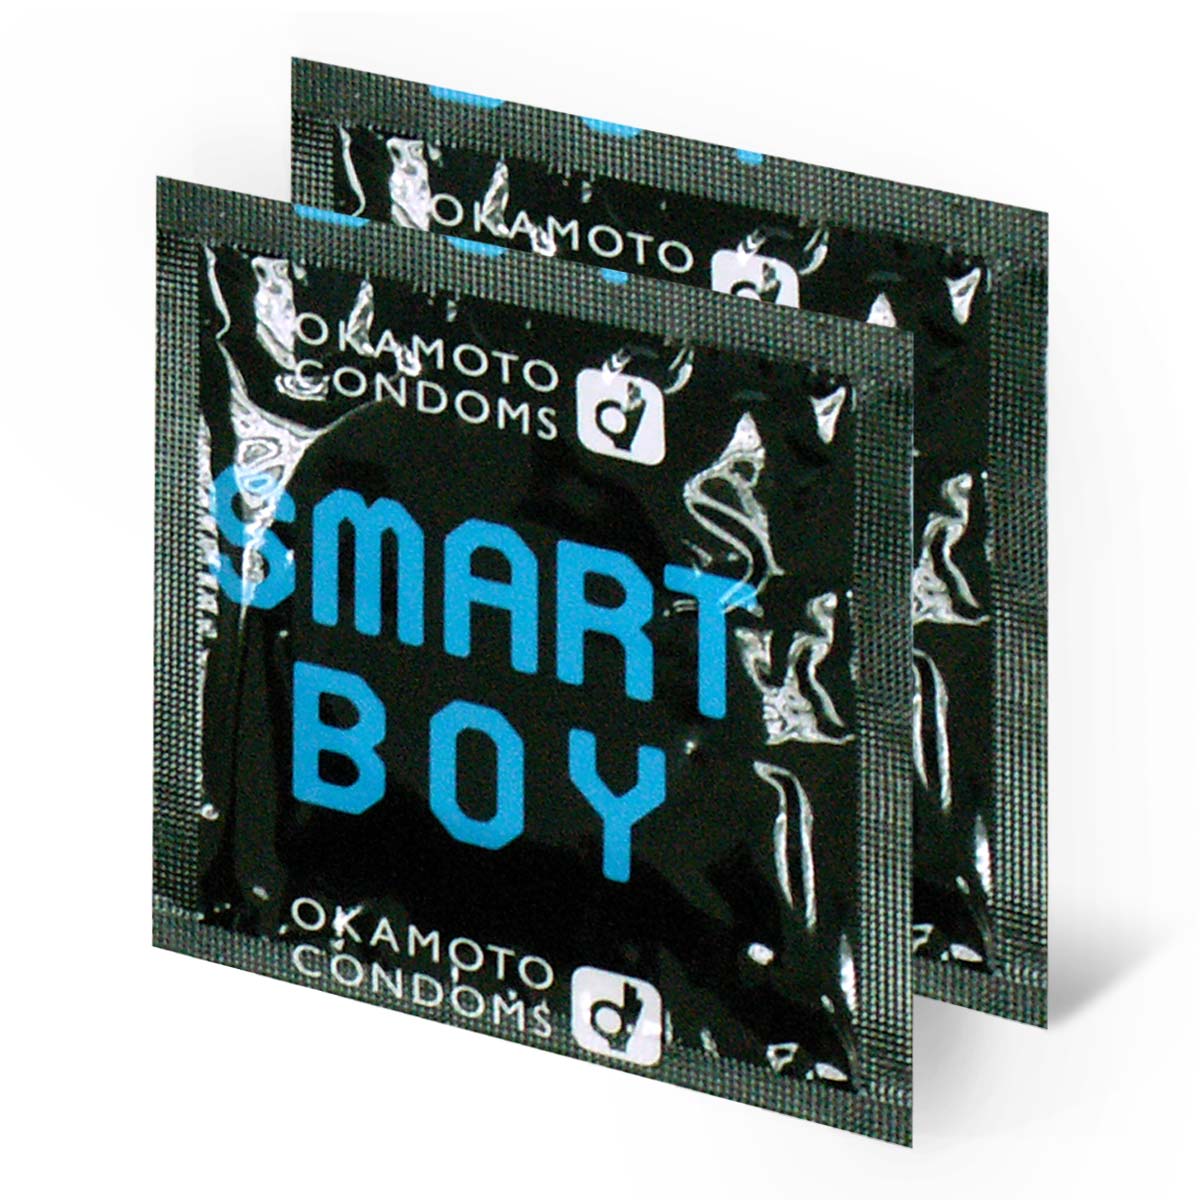 Smart Boy 49mm (Japan Edition) 2 pieces Latex Condom-p_1